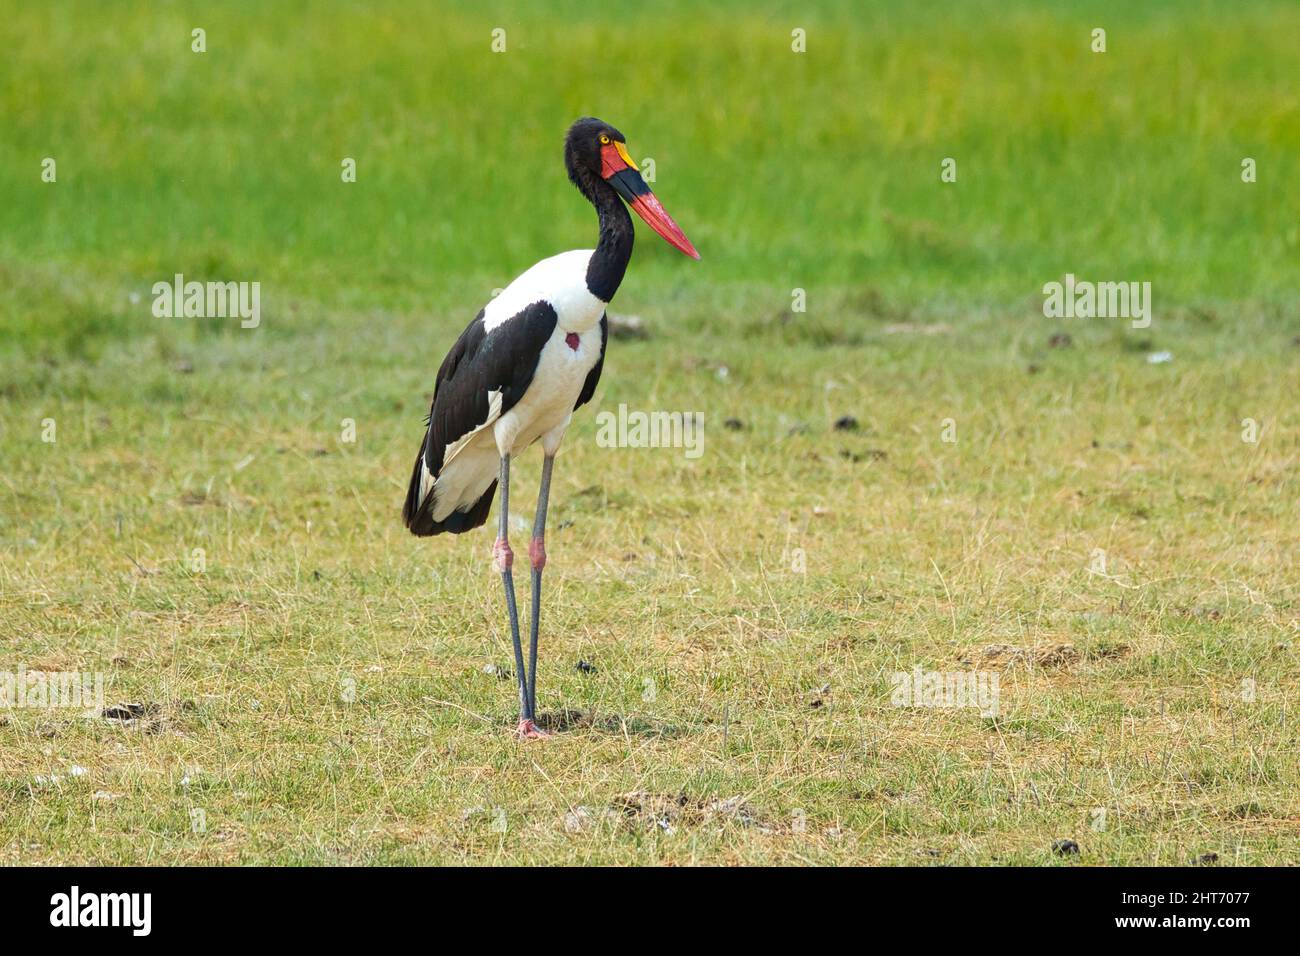 Saddle-billed stork, Ephippiorhynchus senegalensis, in Amboseli National Park in Kenya. Stock Photo